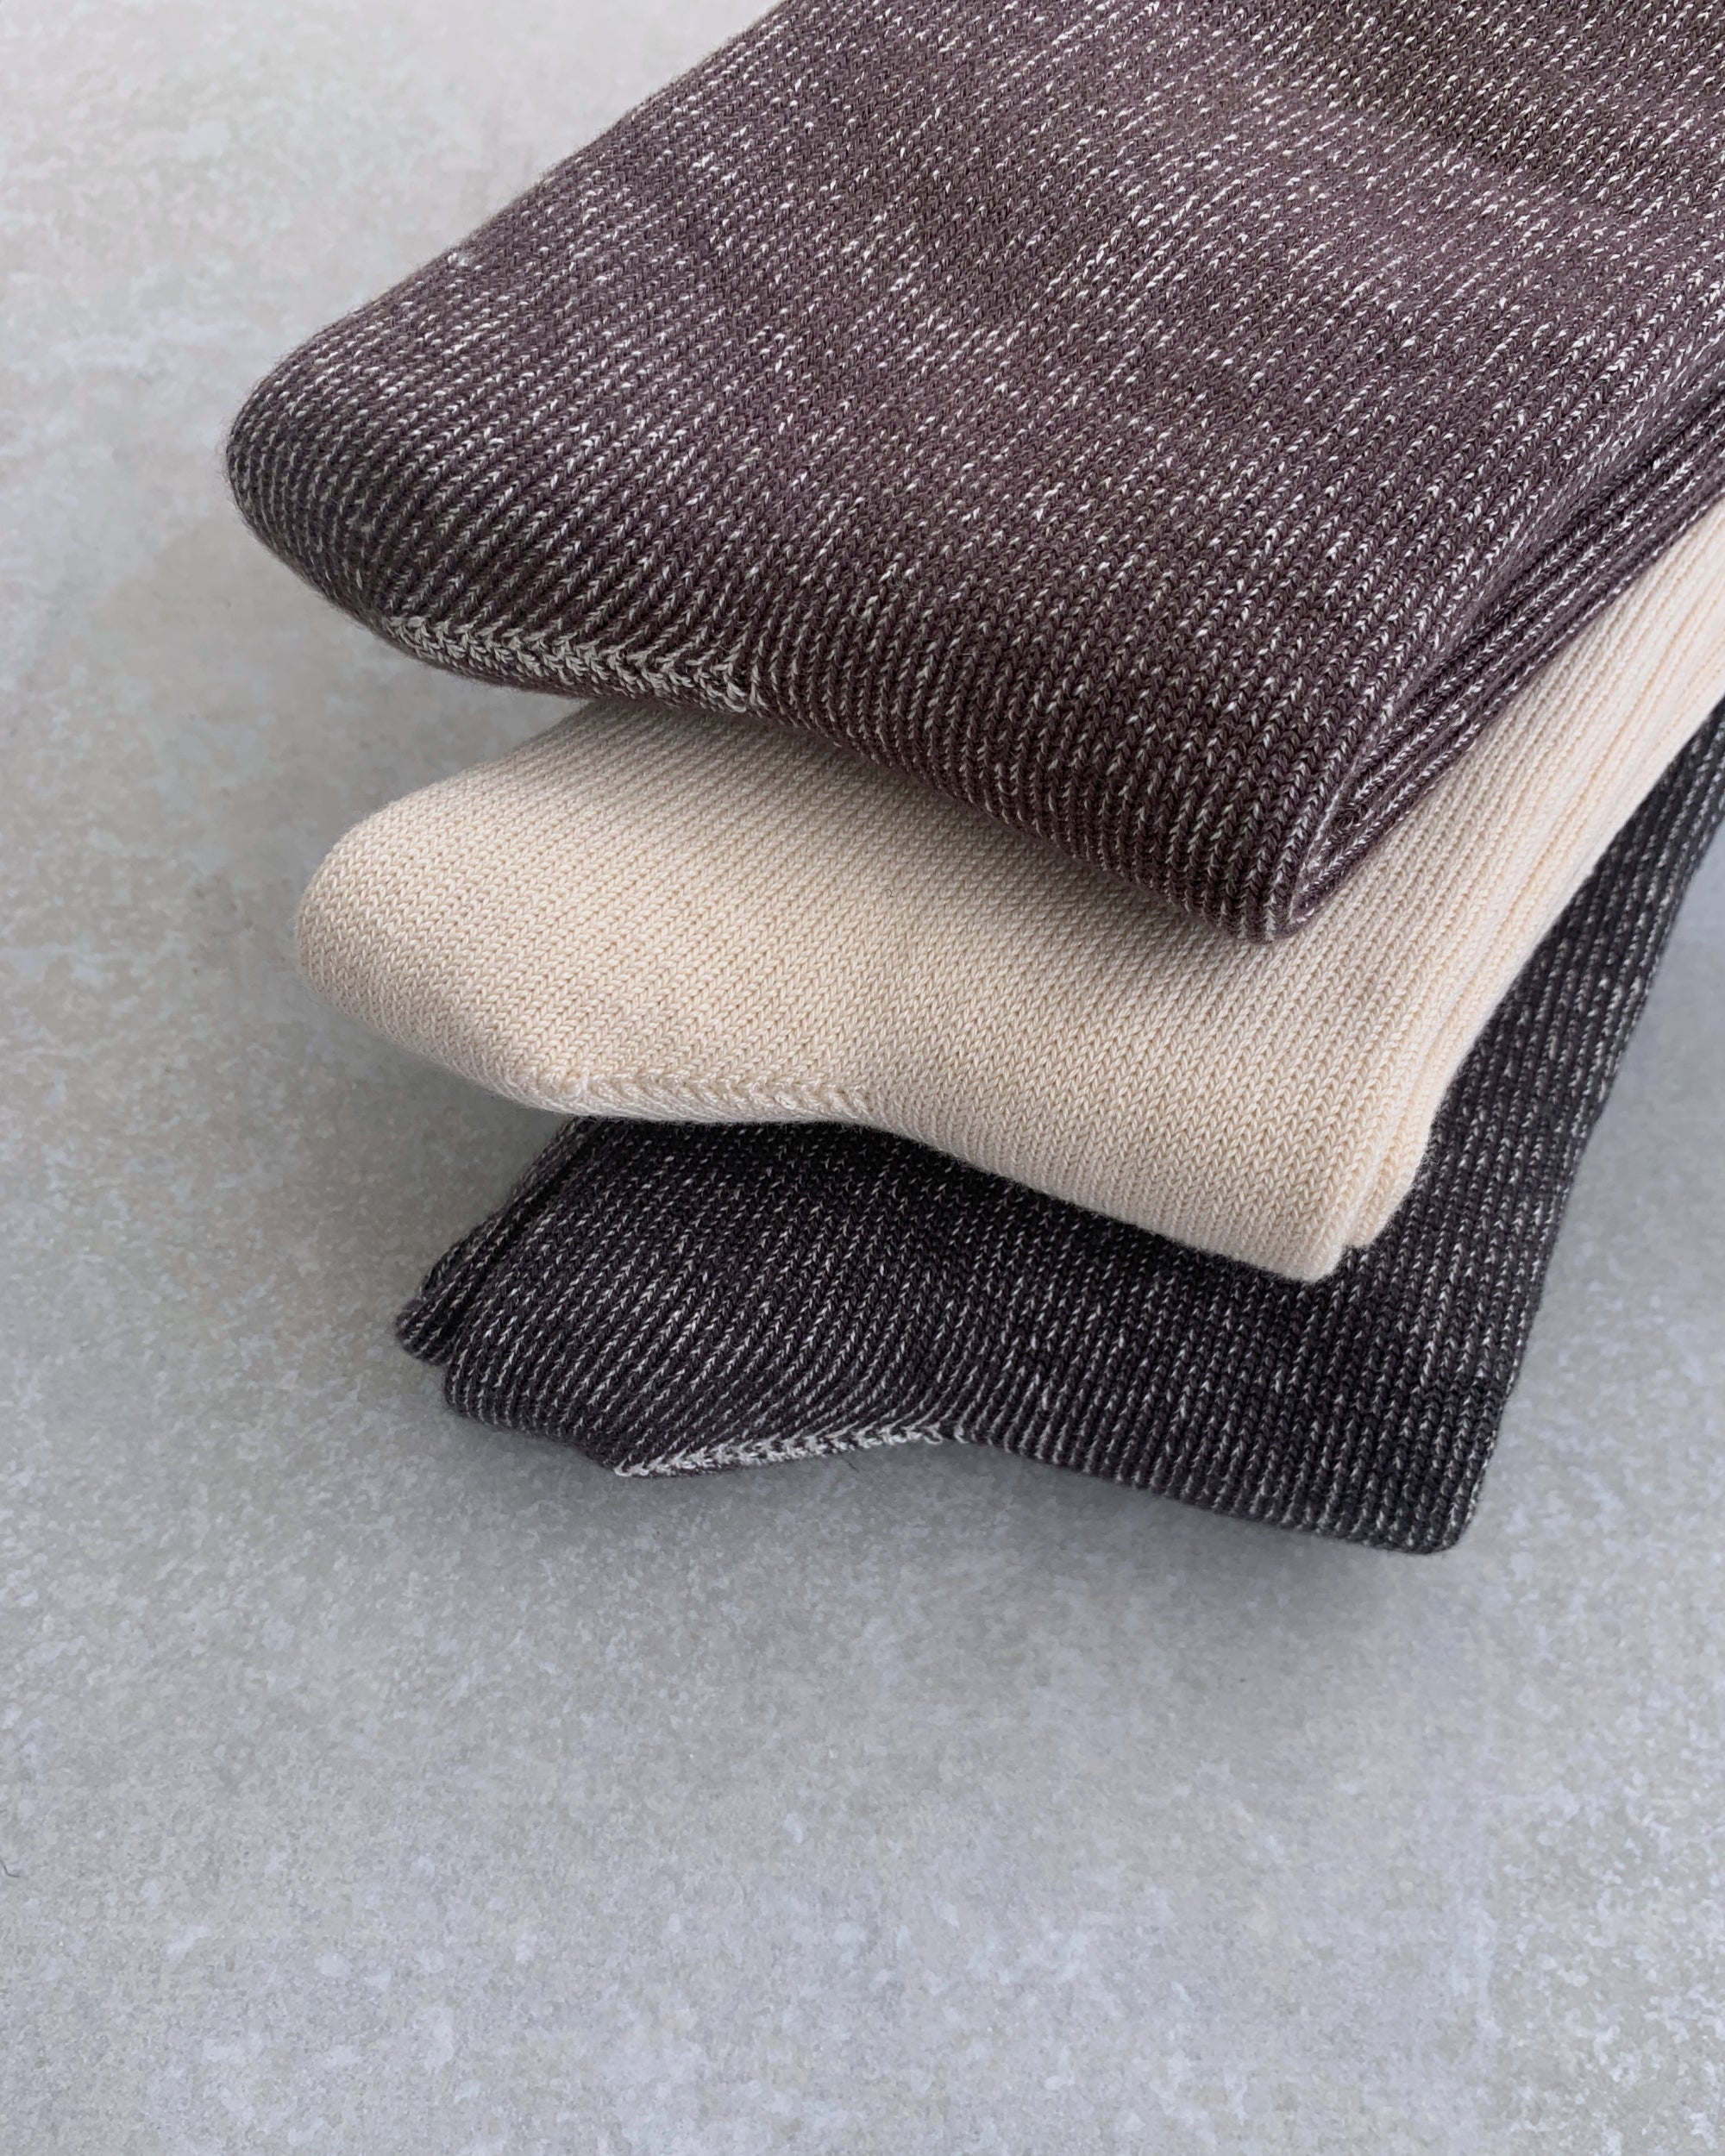 nishiguchi kutsushita : praha silk cotton socks